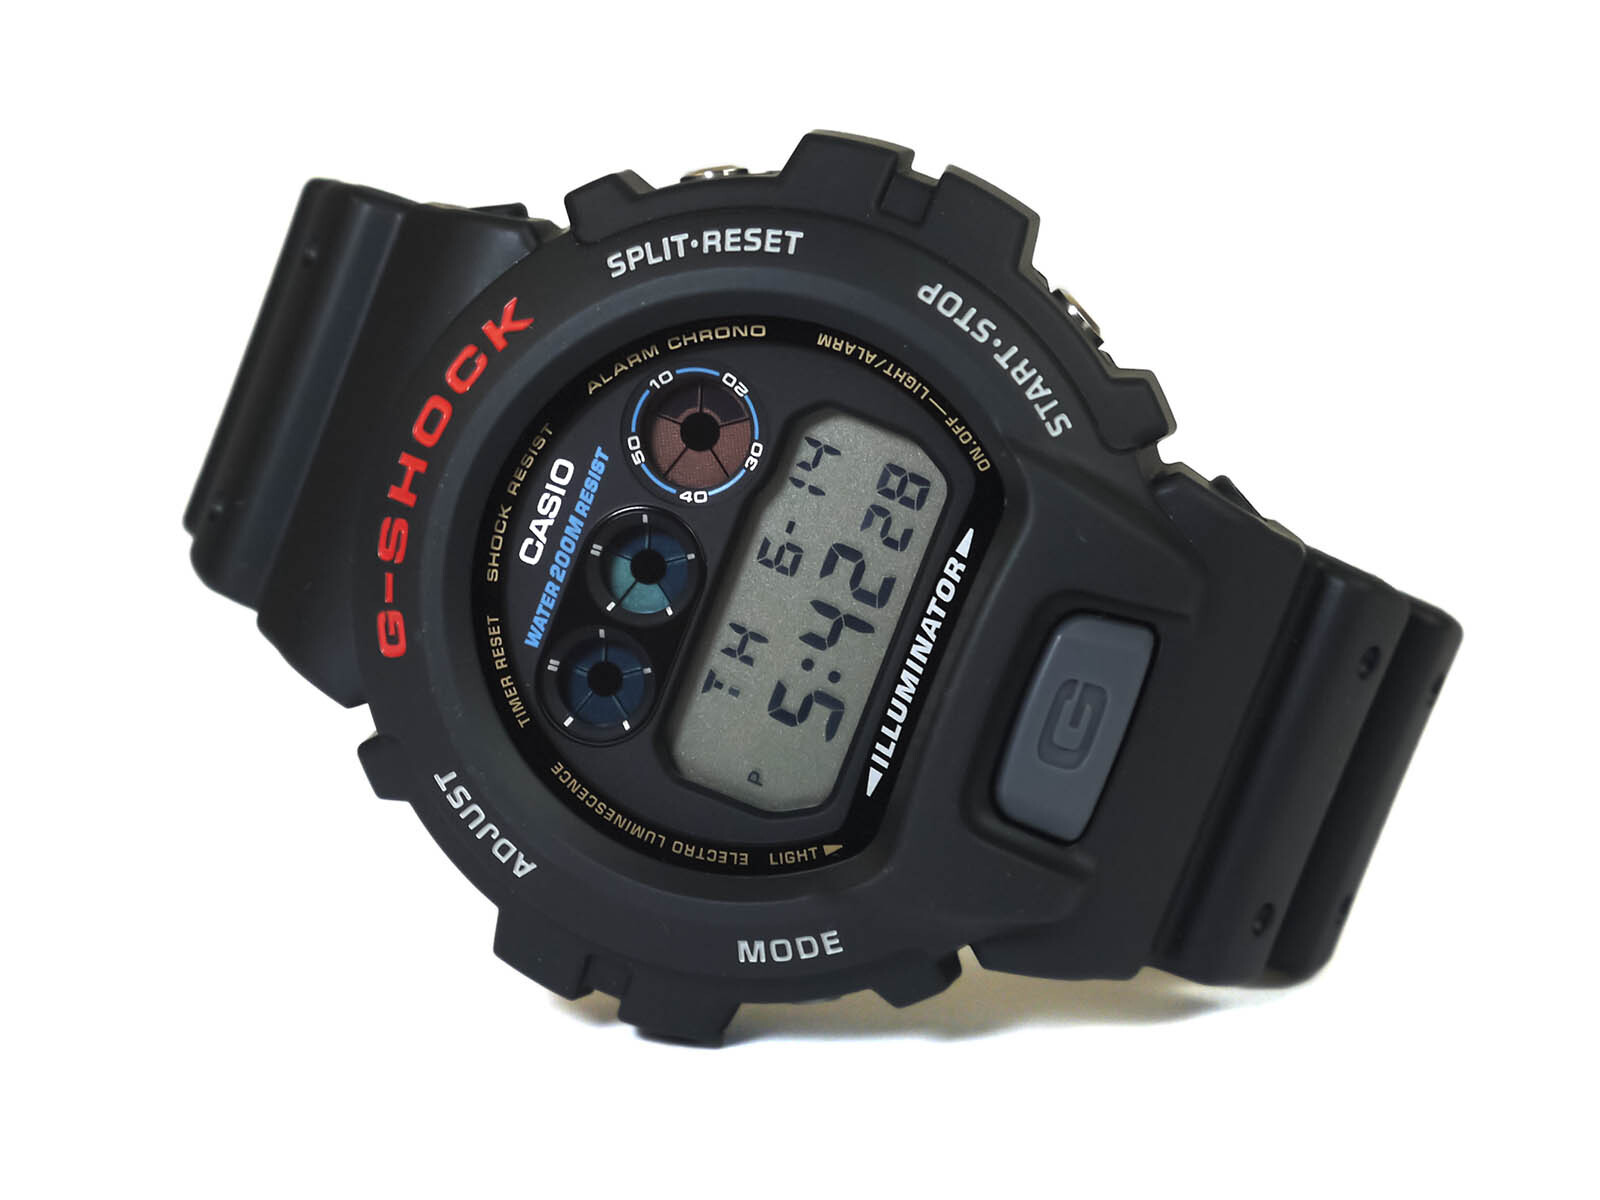 Reloj hombre Casio g-shock dw-6900-1v cronografo multifuncion - antigolpes